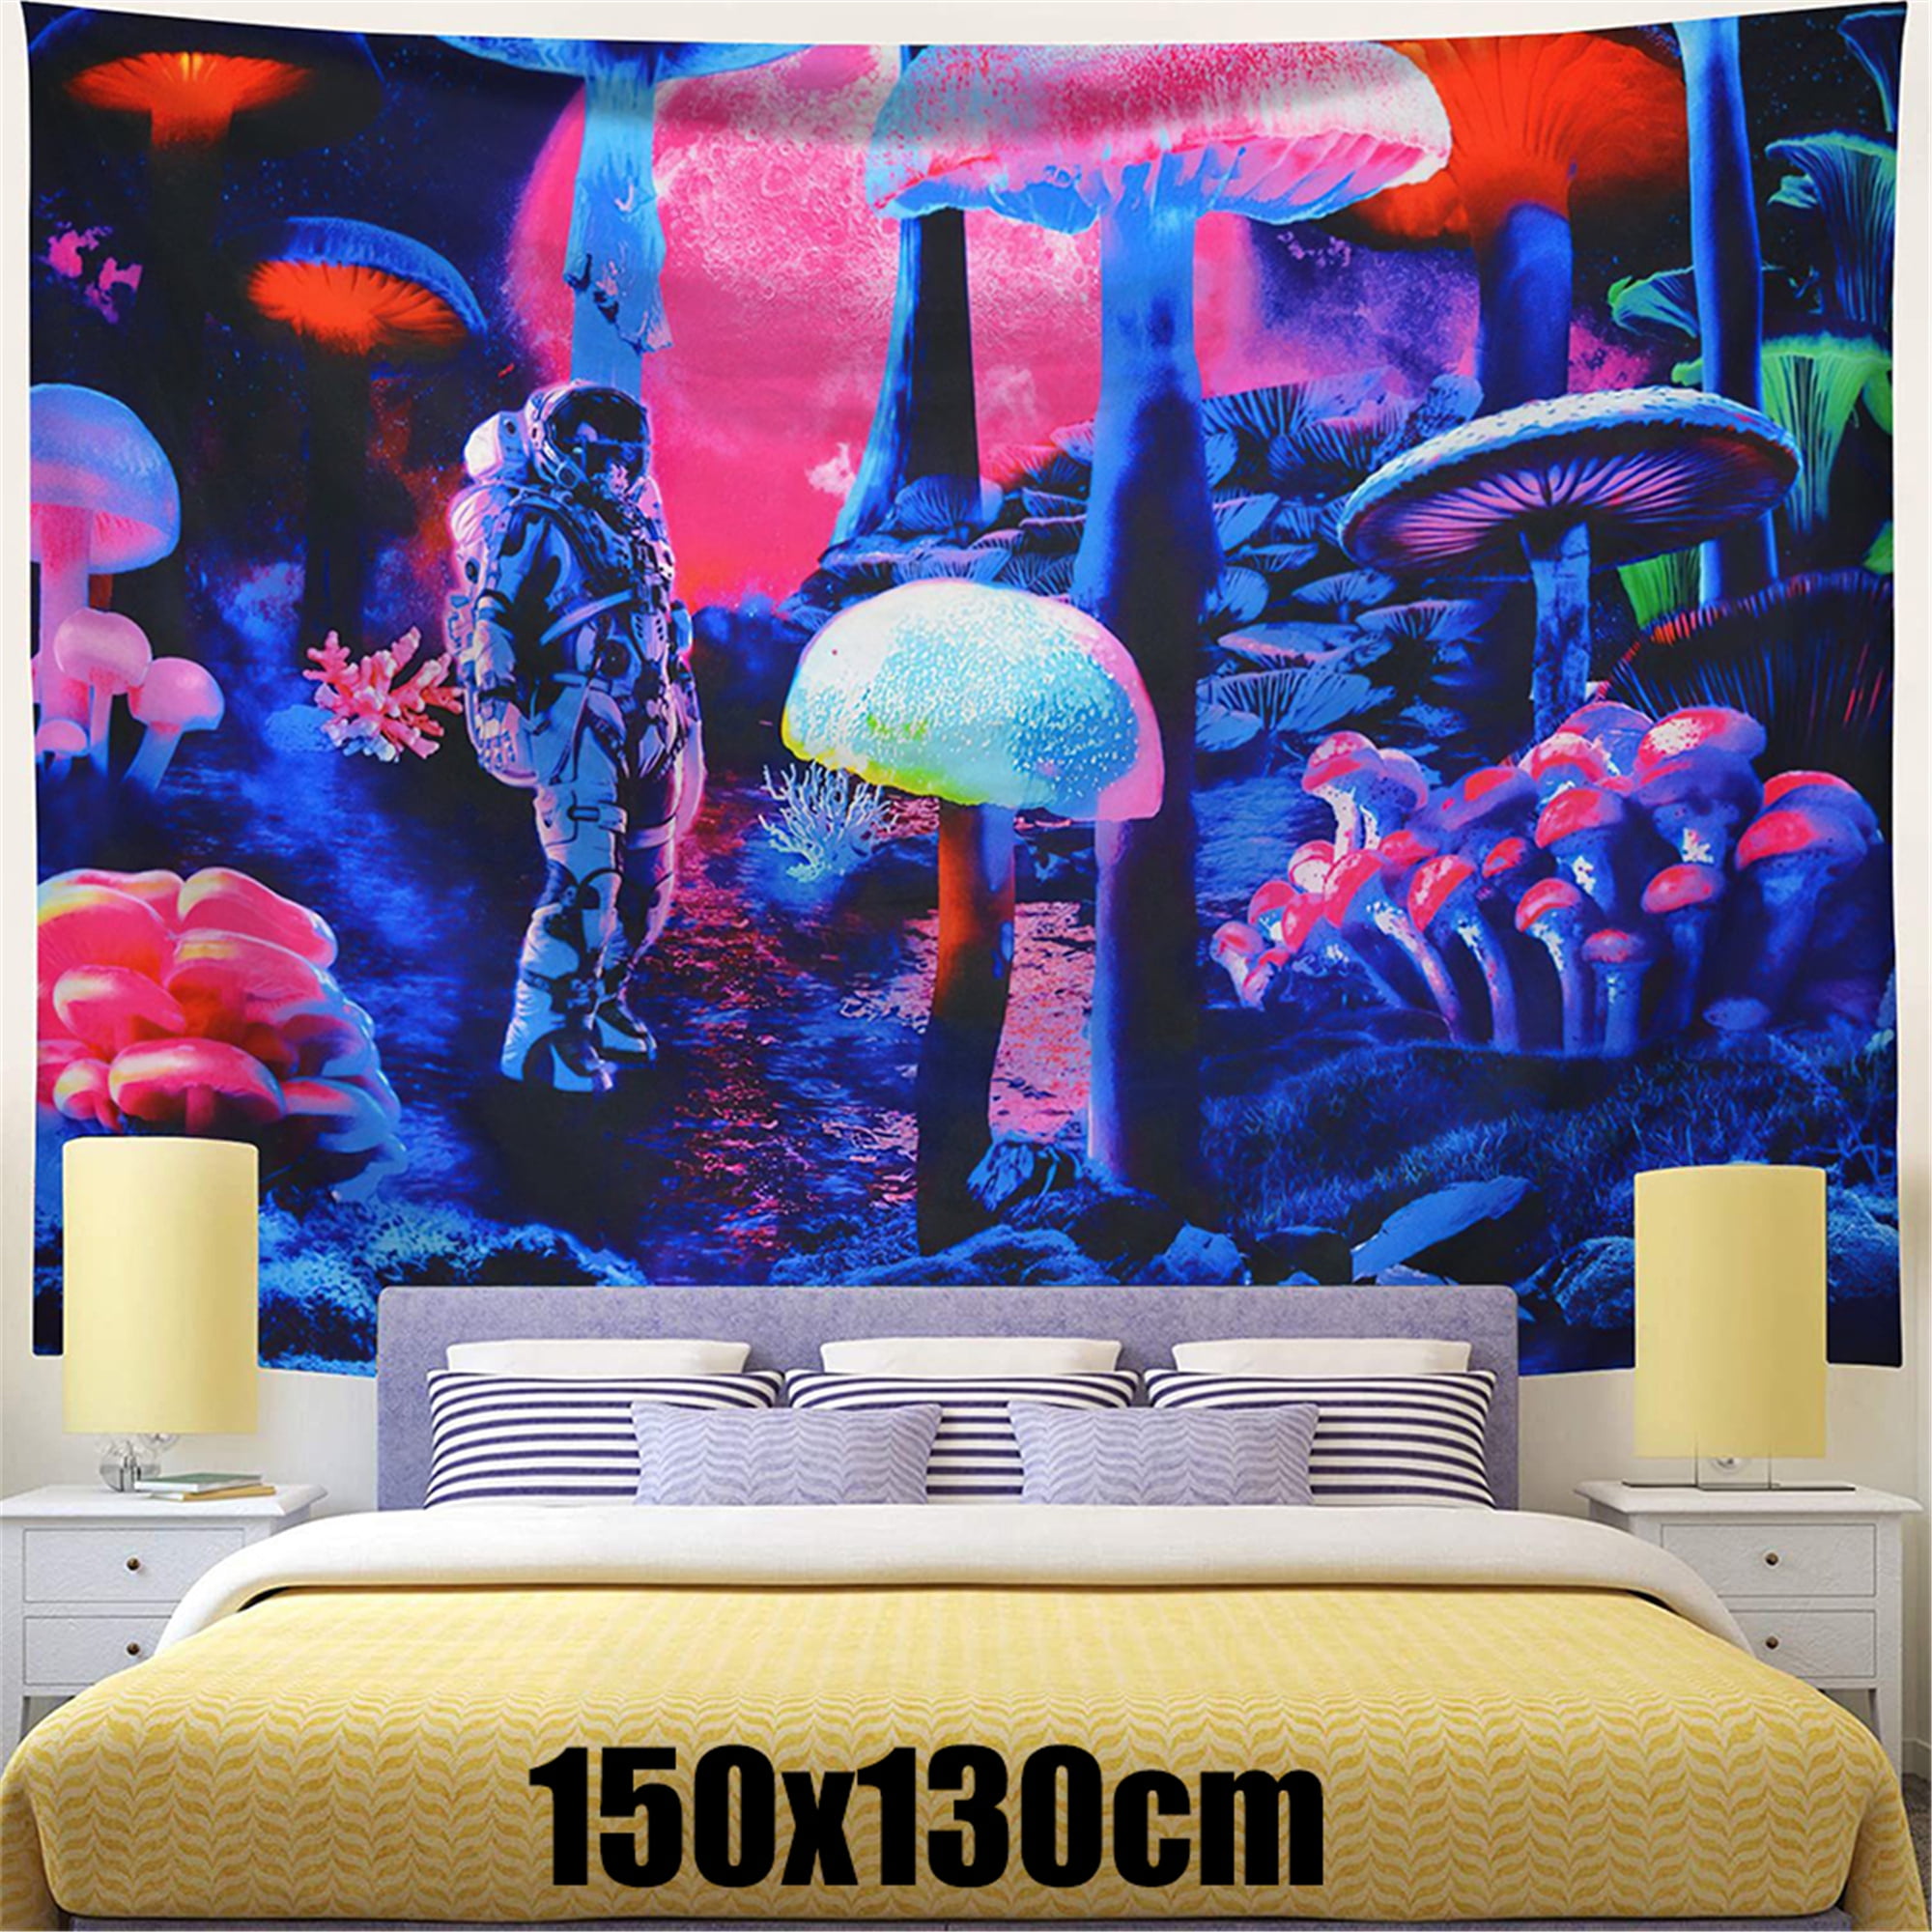 Retro Music Note Tapestry Wall Hanging Dorm Decor Hippie Throw Bedspread Decor 